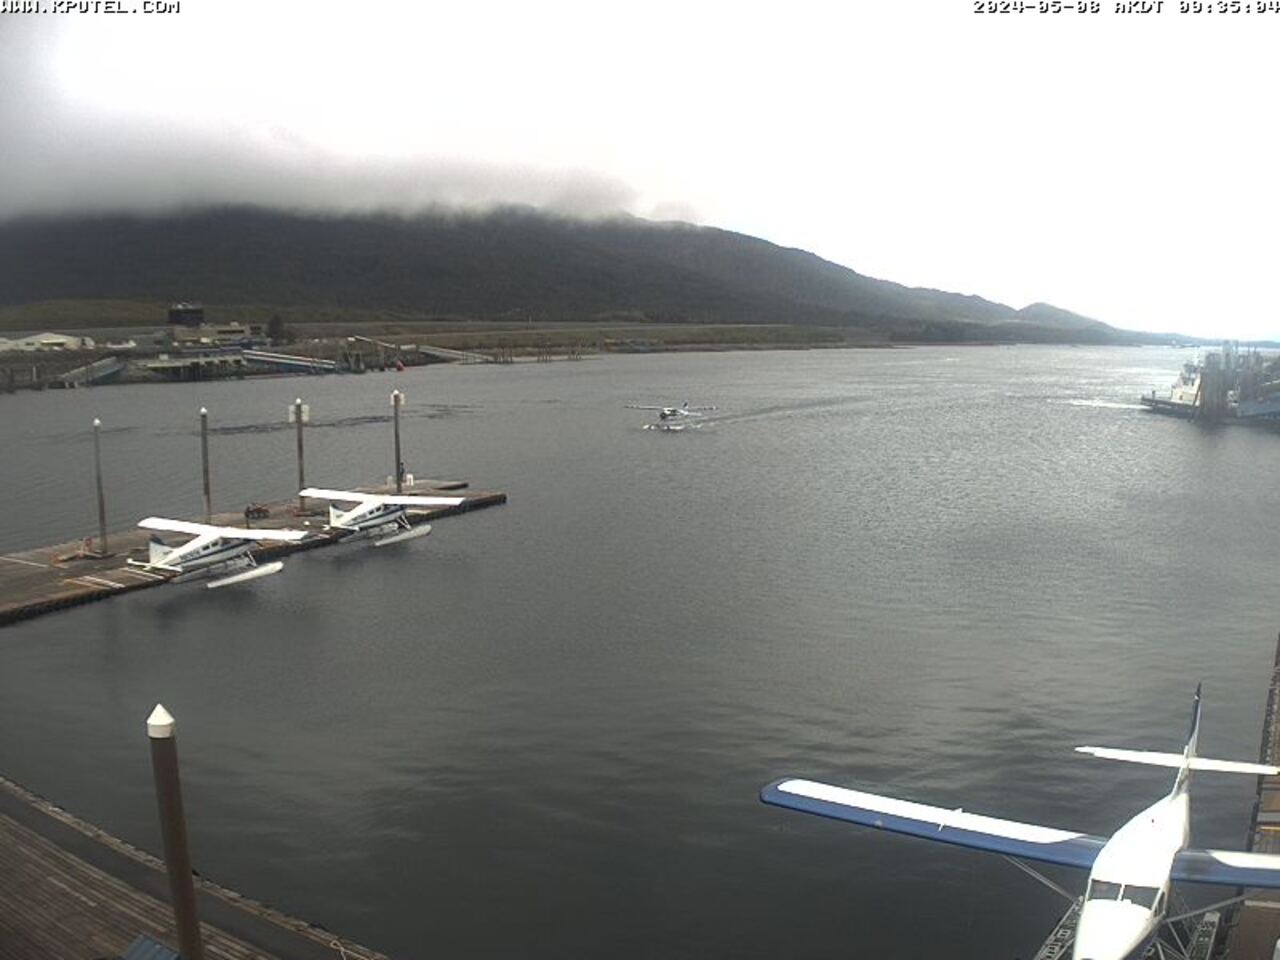 Current Ketchikan Webcam #5 Alaska-sized Image